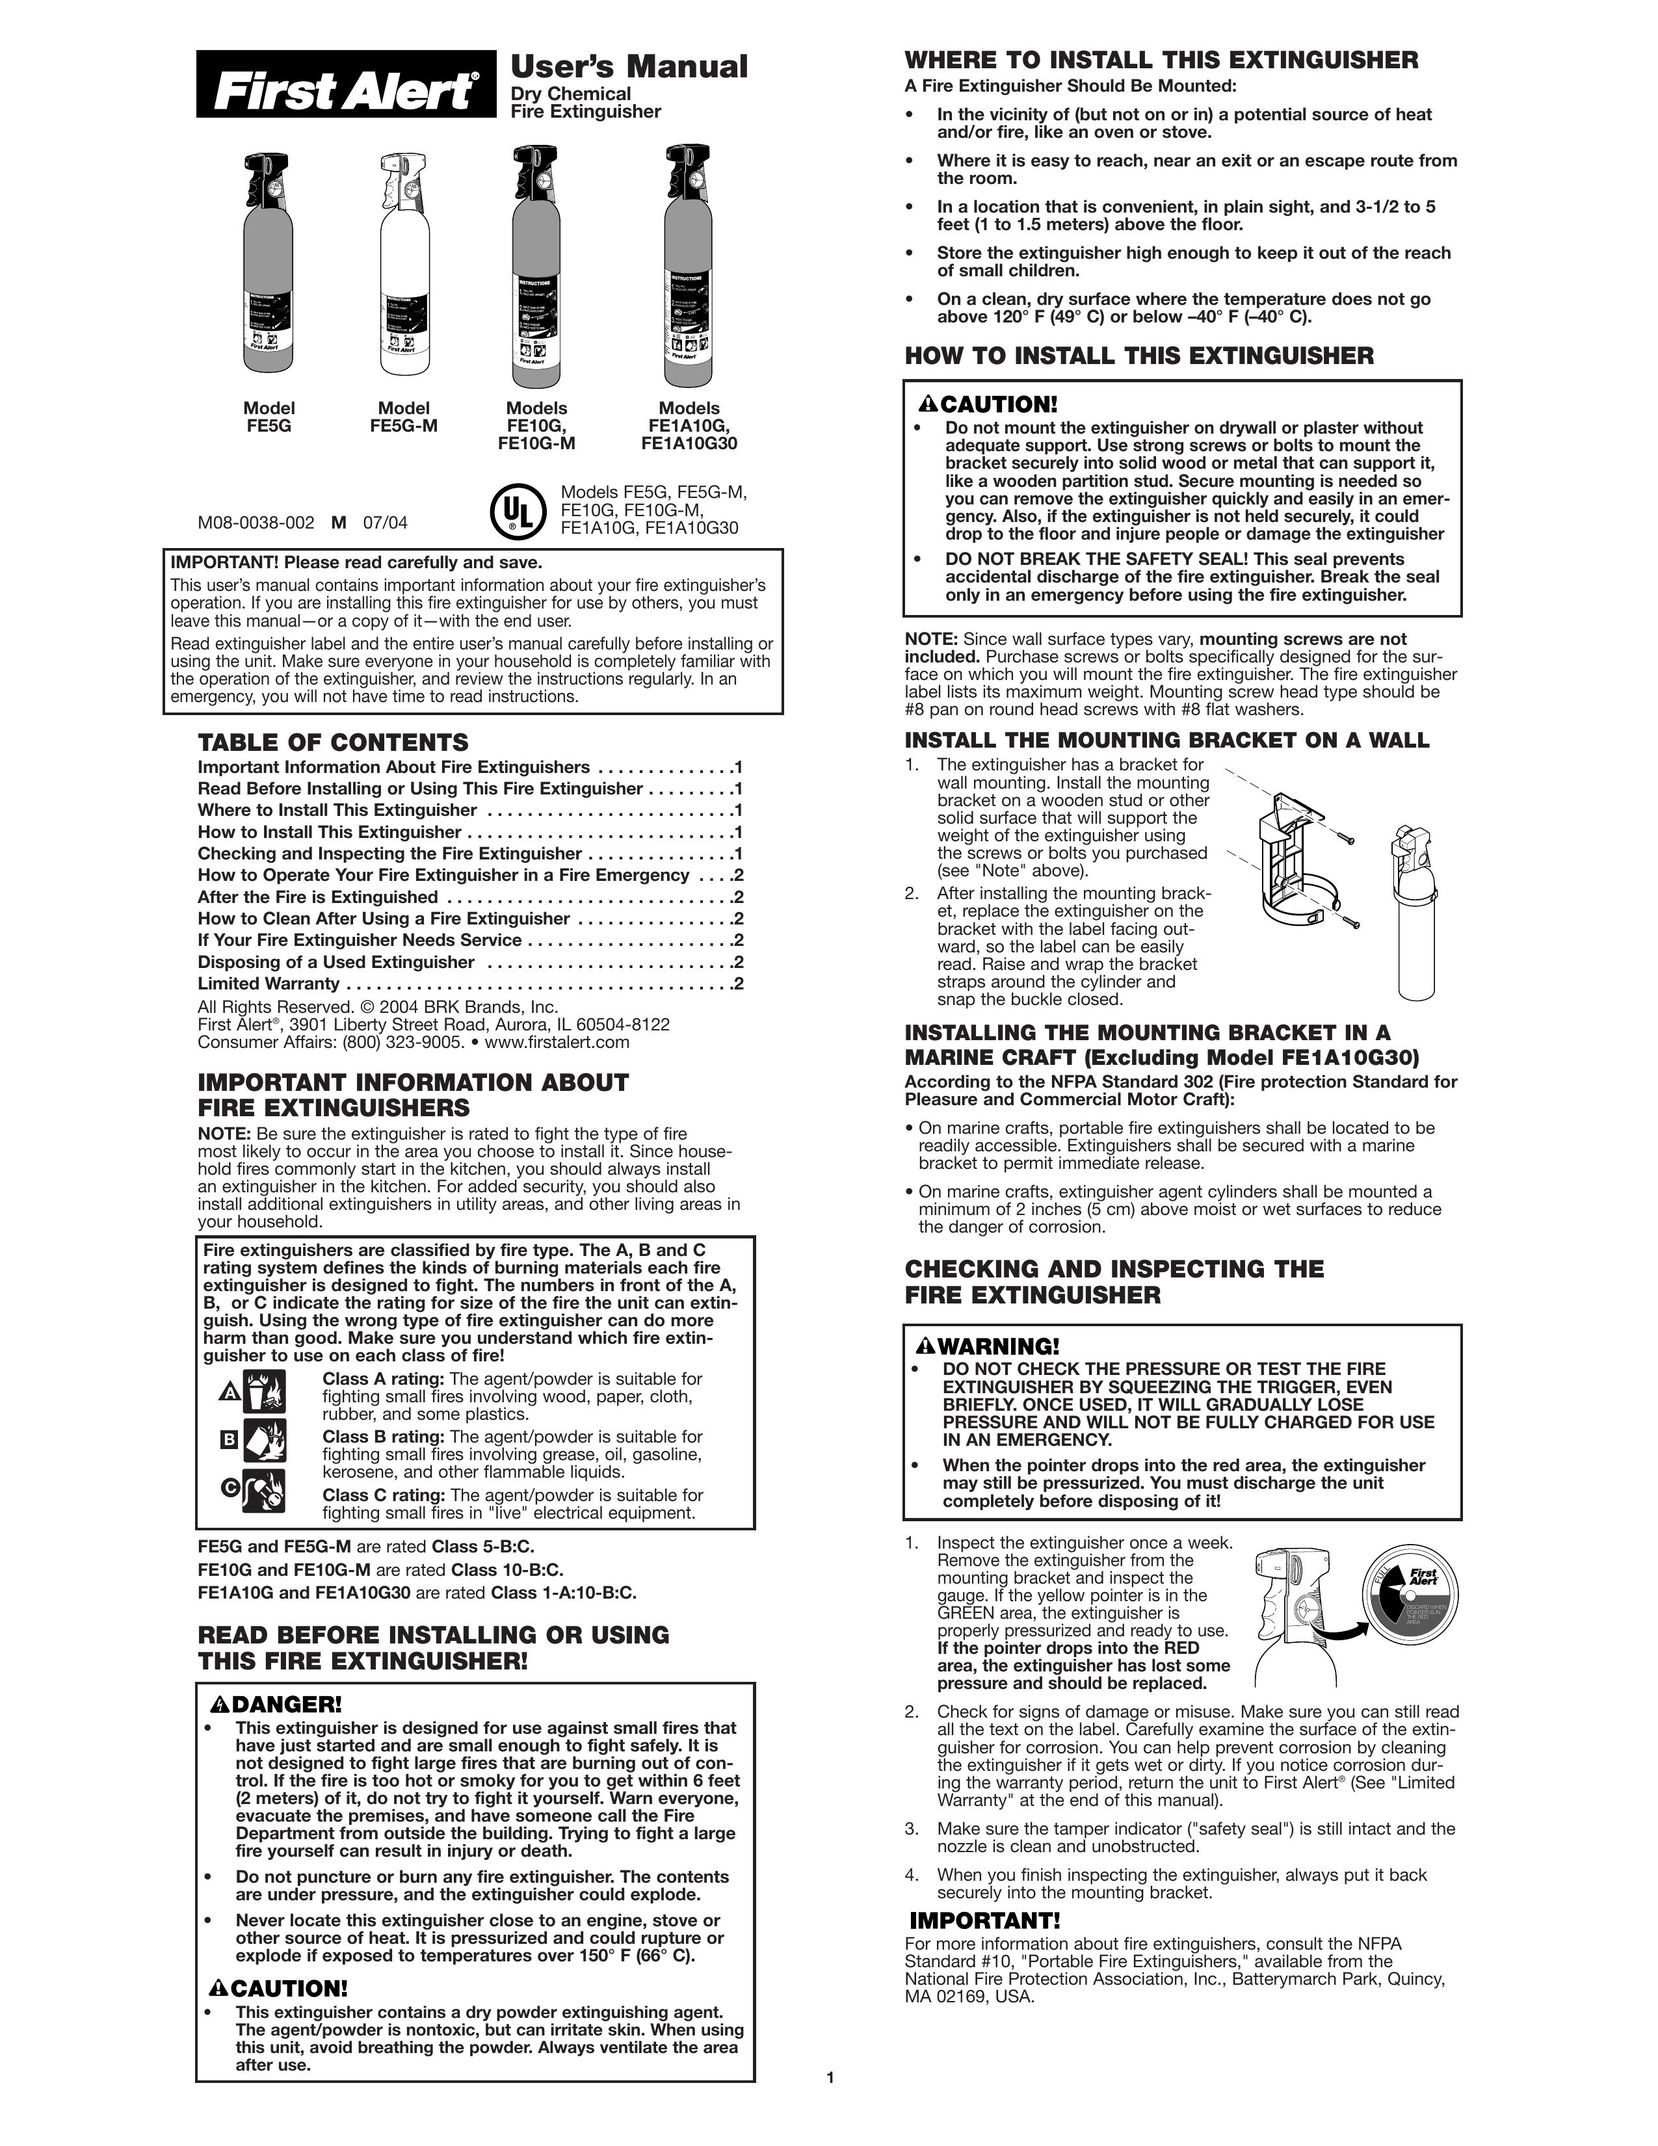 First Alert FE5G Fire Extinguisher User Manual